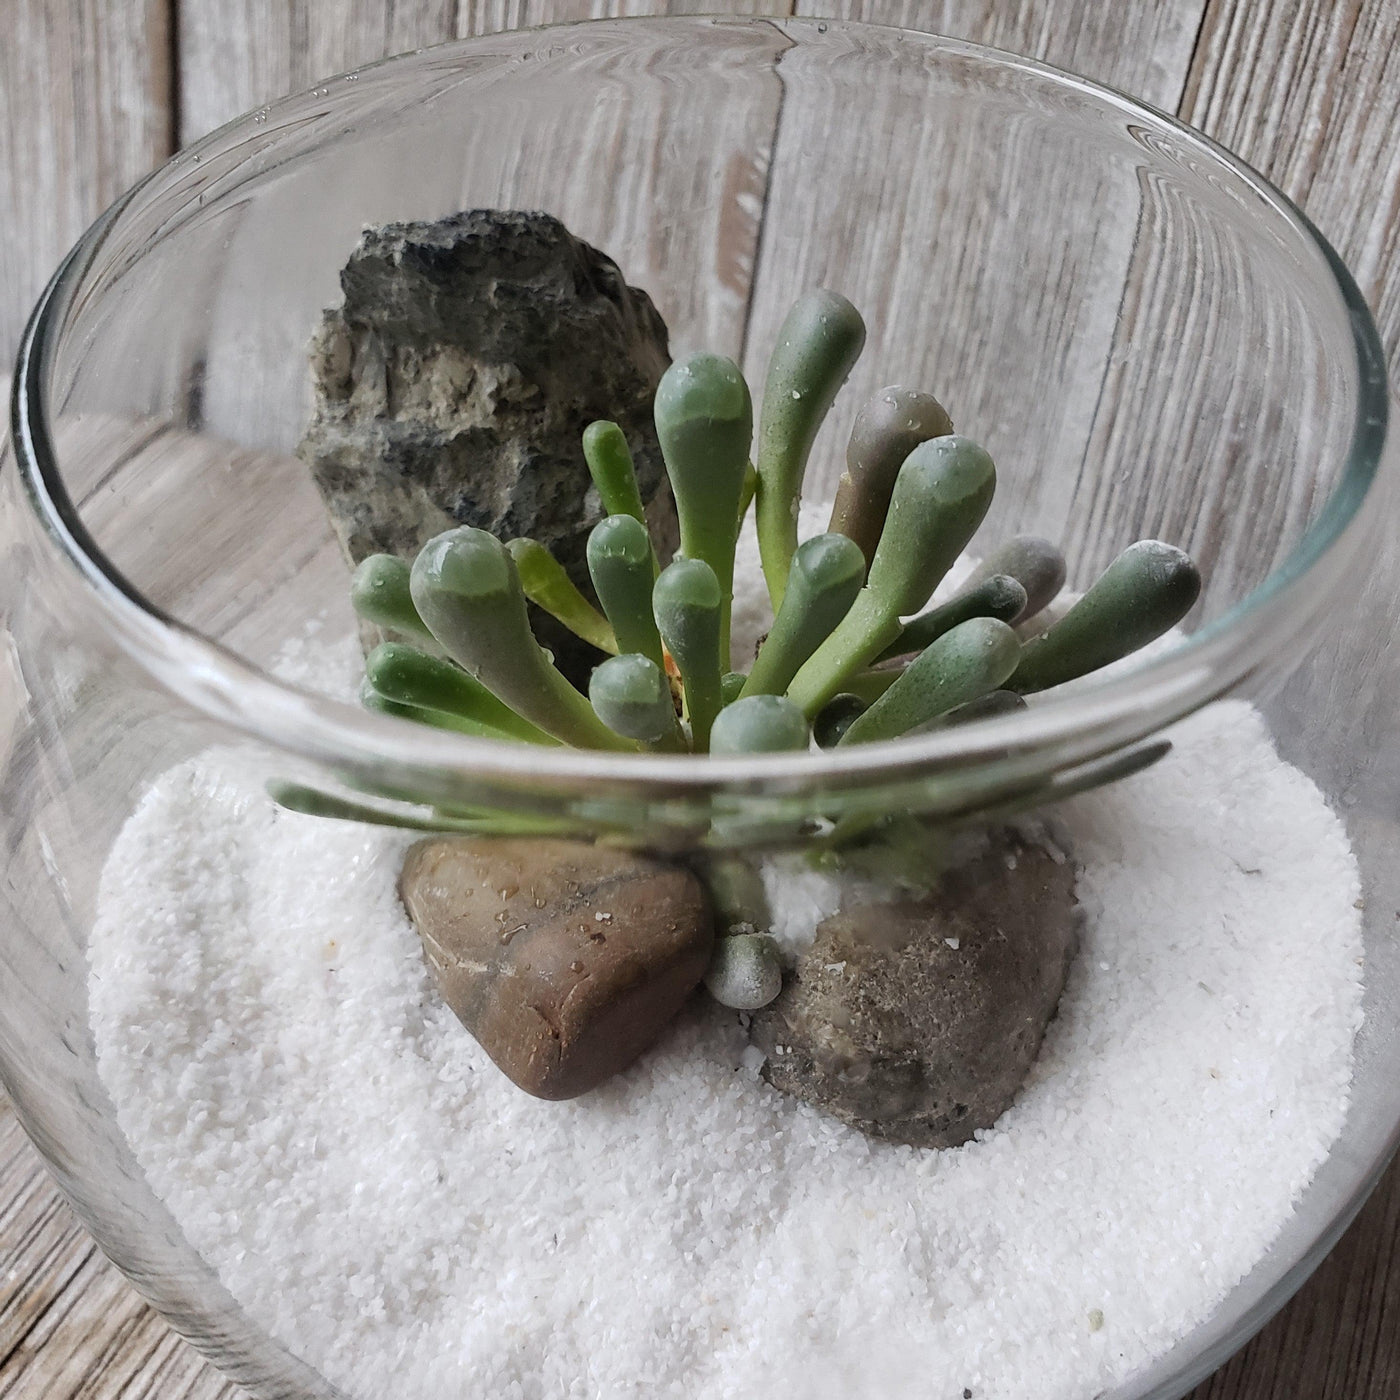 DIY succulent glass globe terrarium